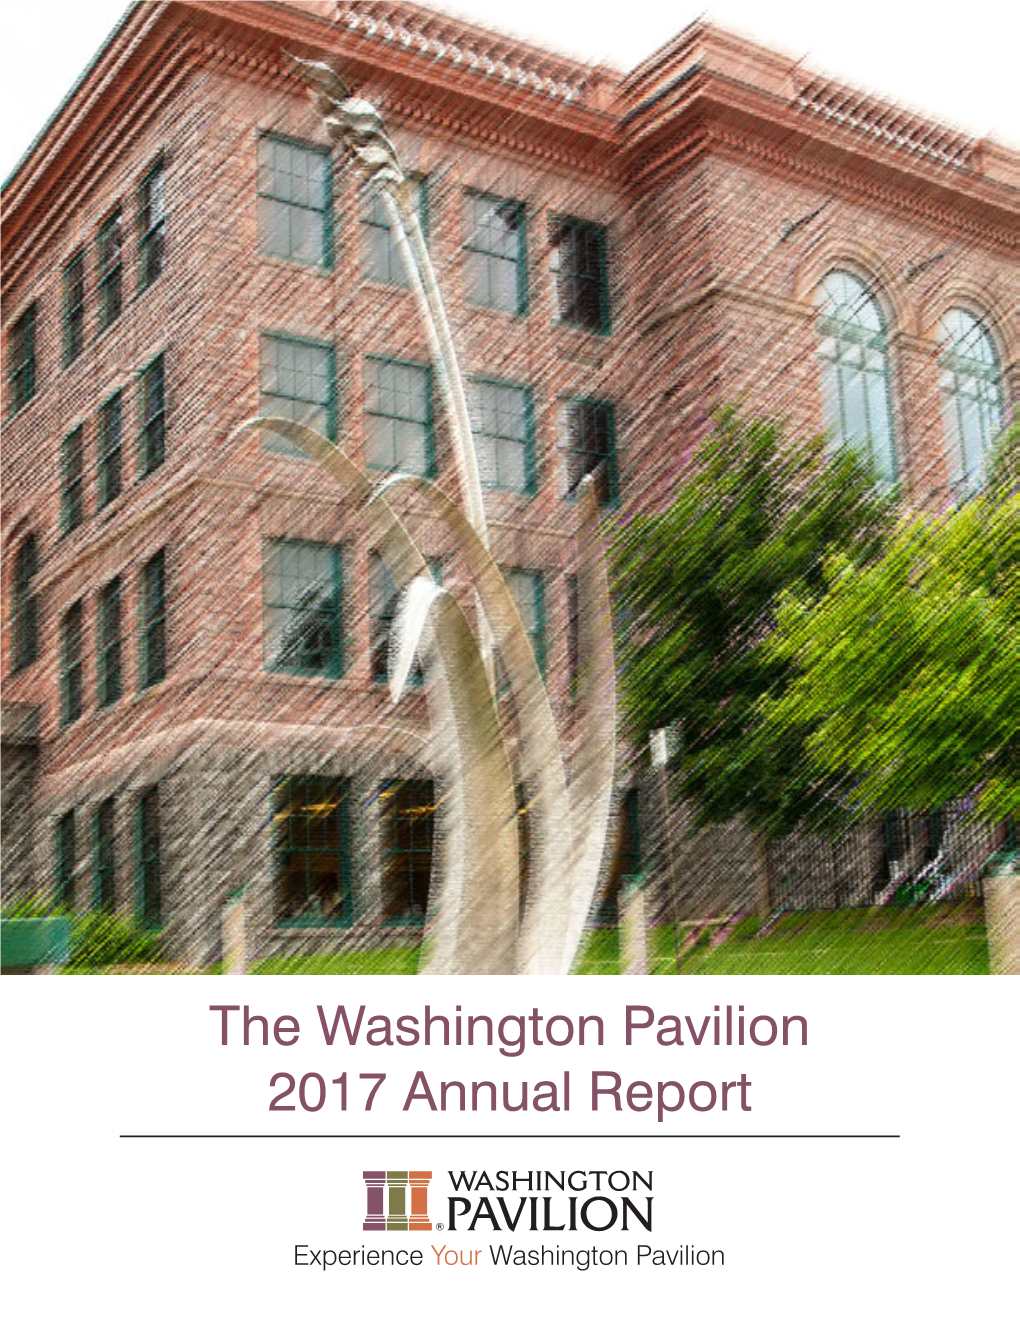 The Washington Pavilion 2017 Annual Report